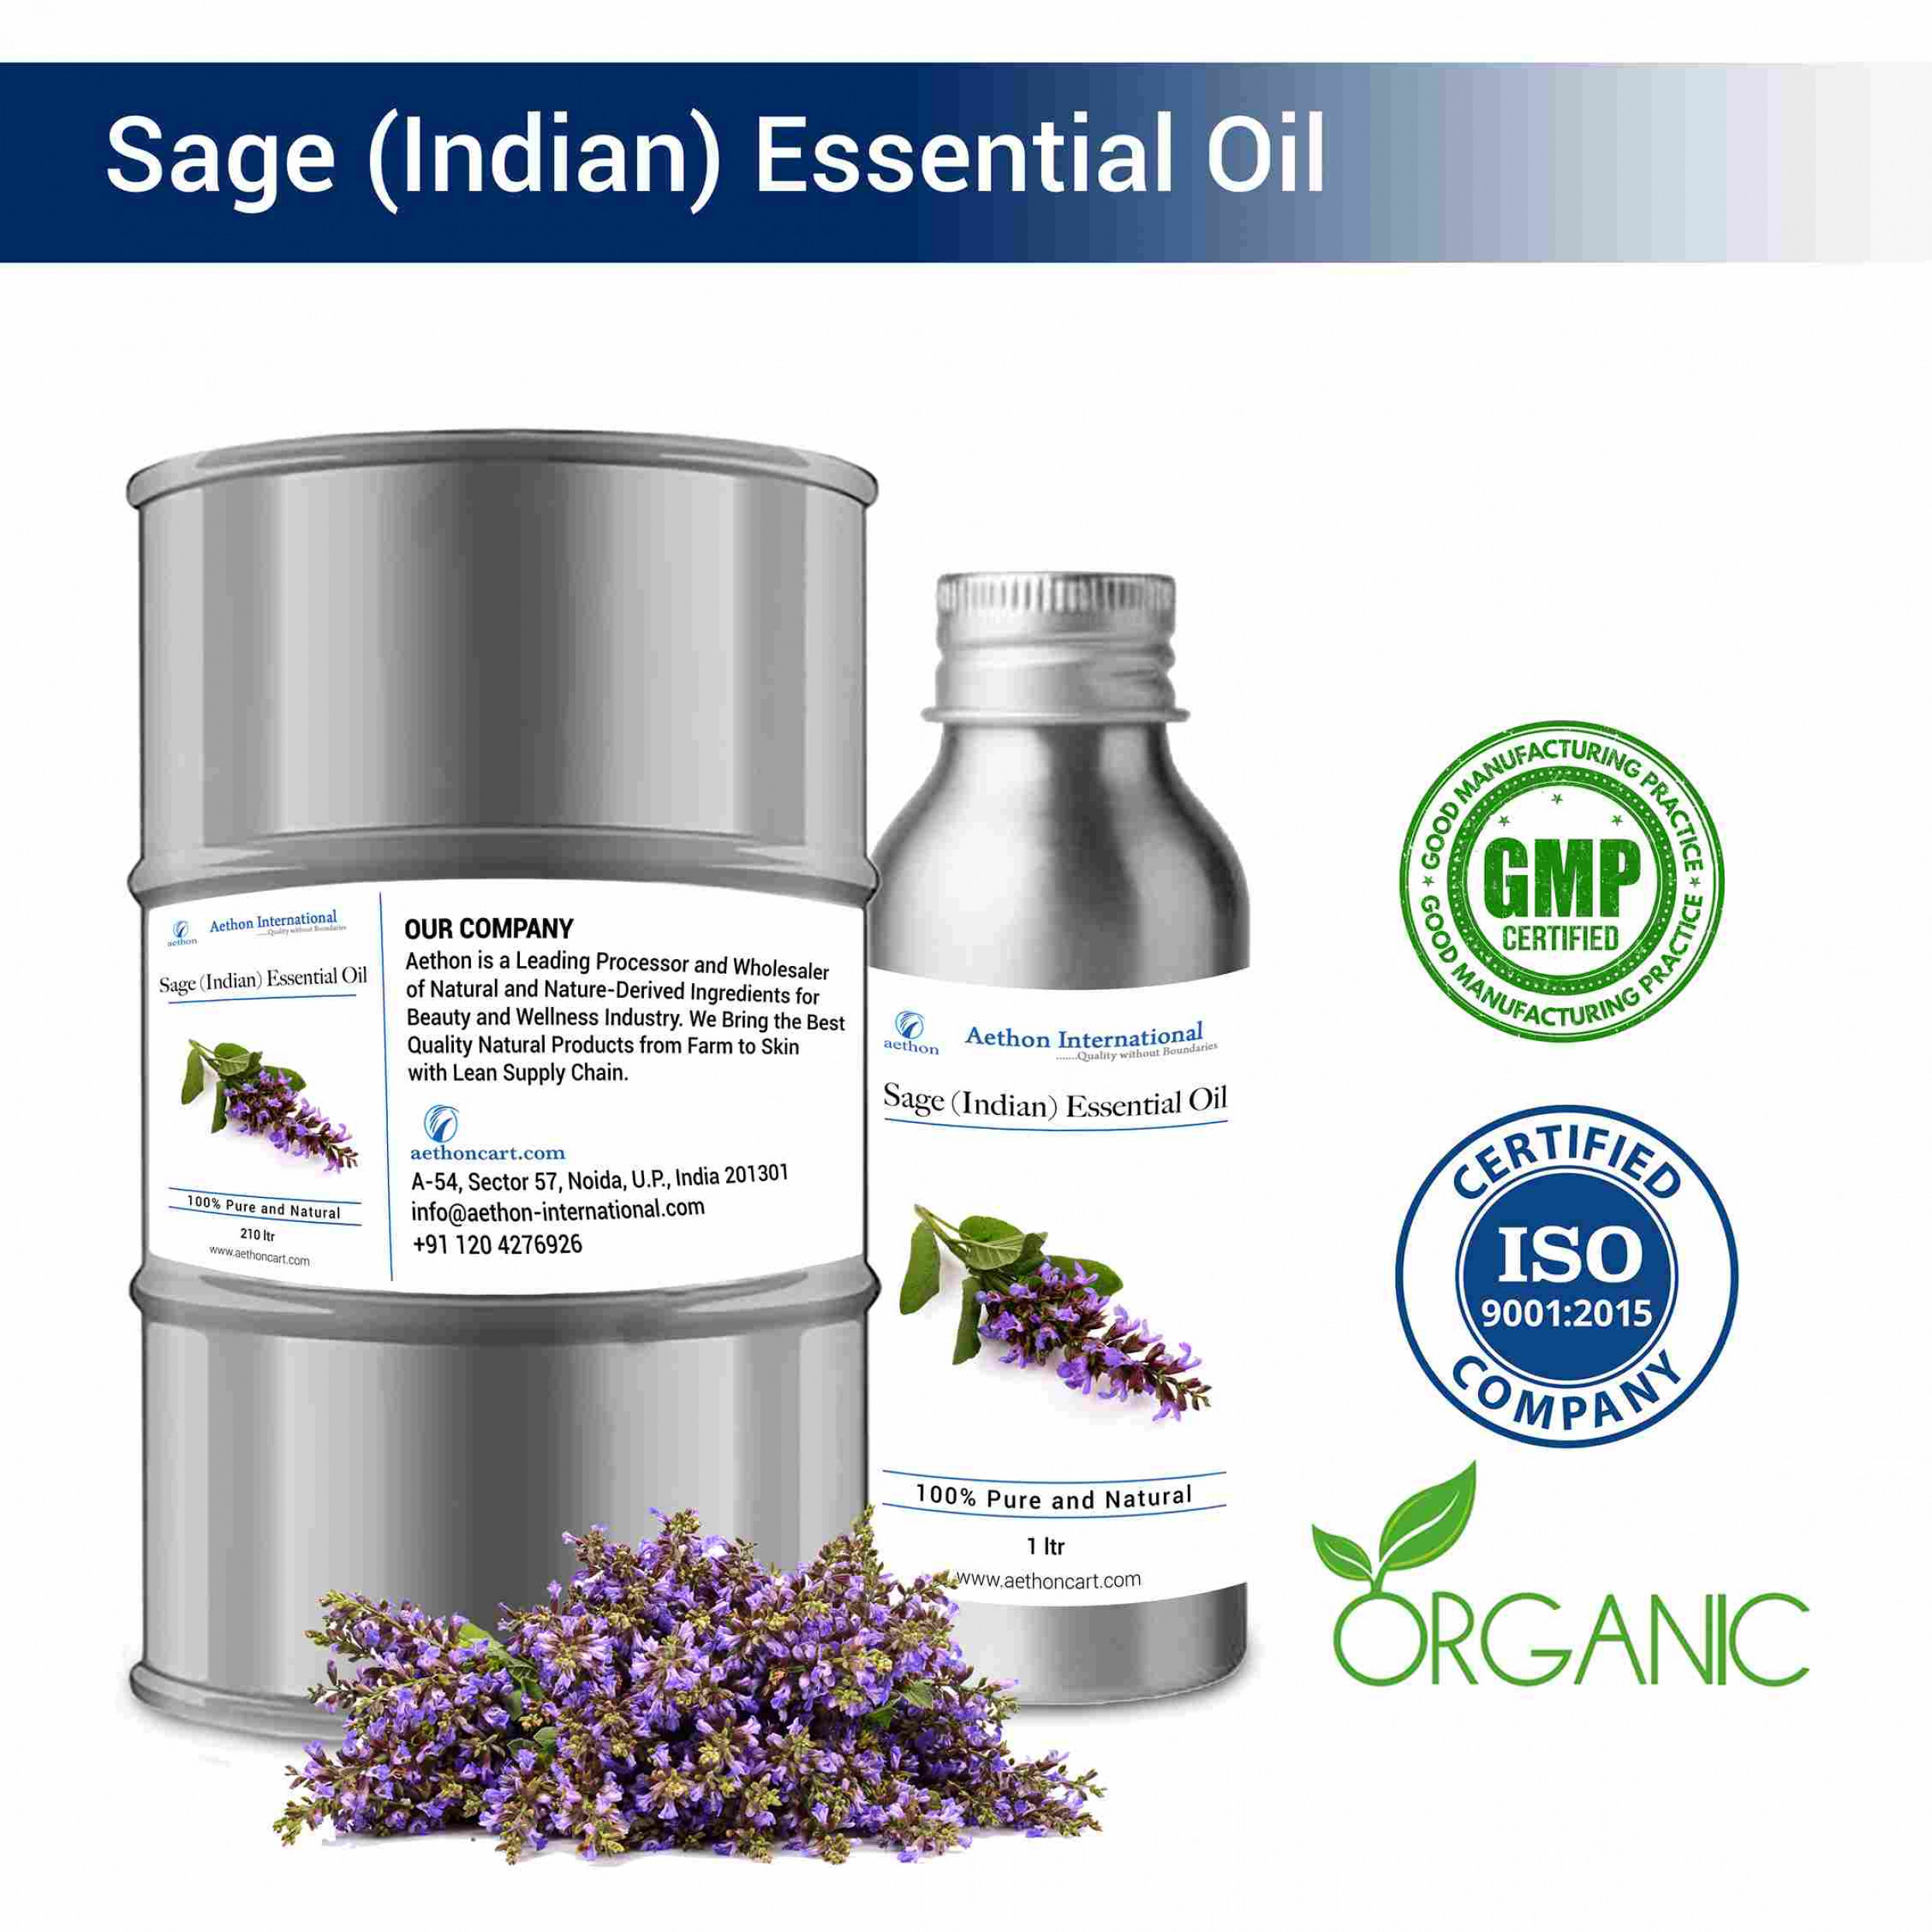 Sage (Indian) Essential Oil